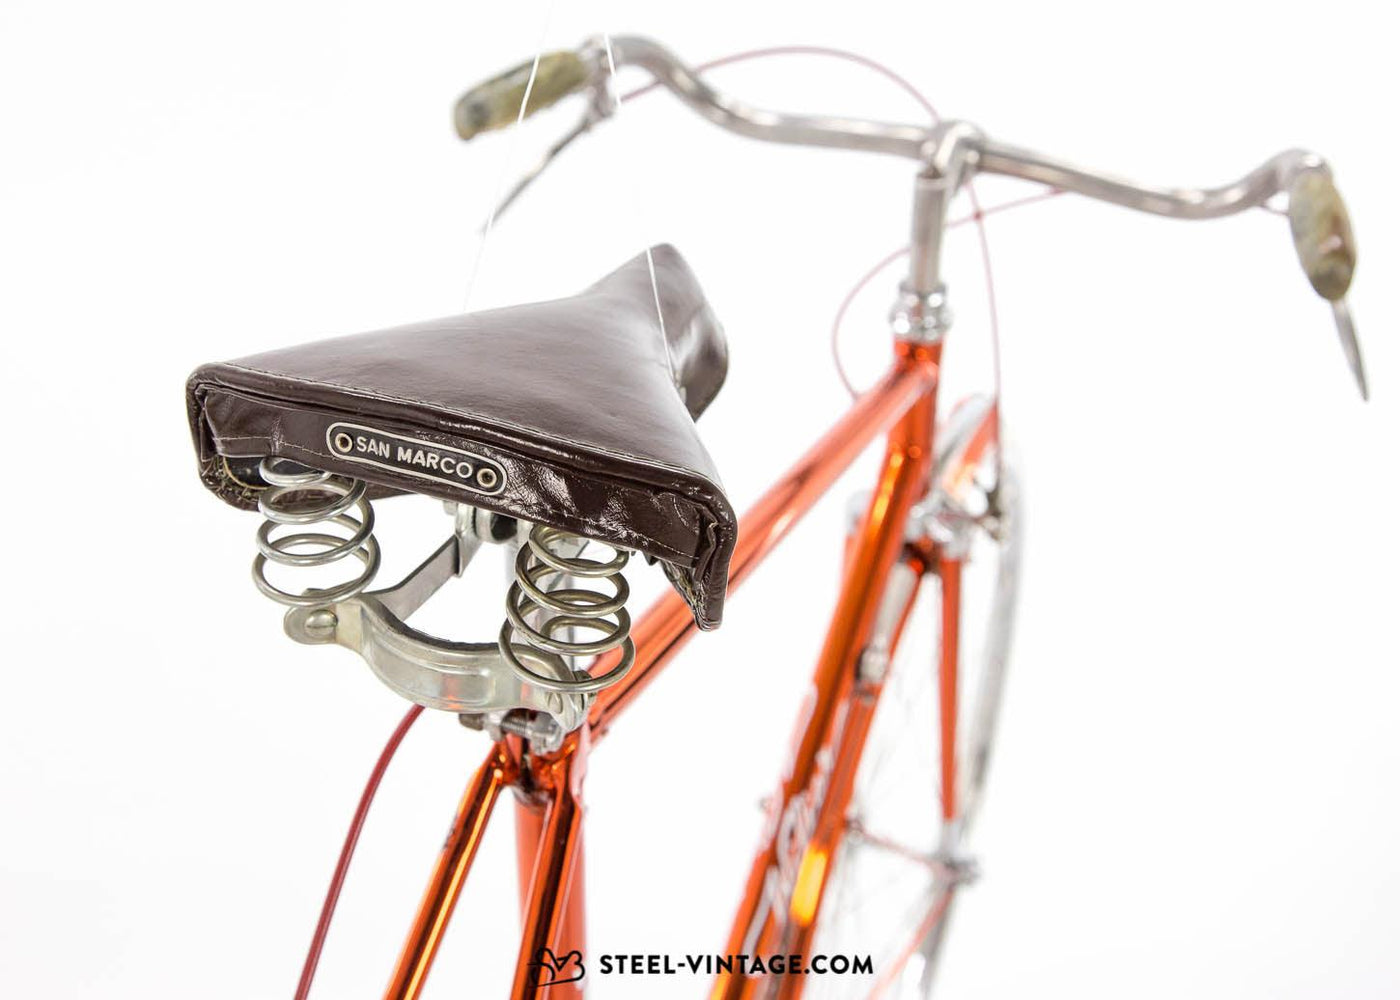 Wilier Triestina Gentleman's Sport Bike 1960s - Steel Vintage Bikes